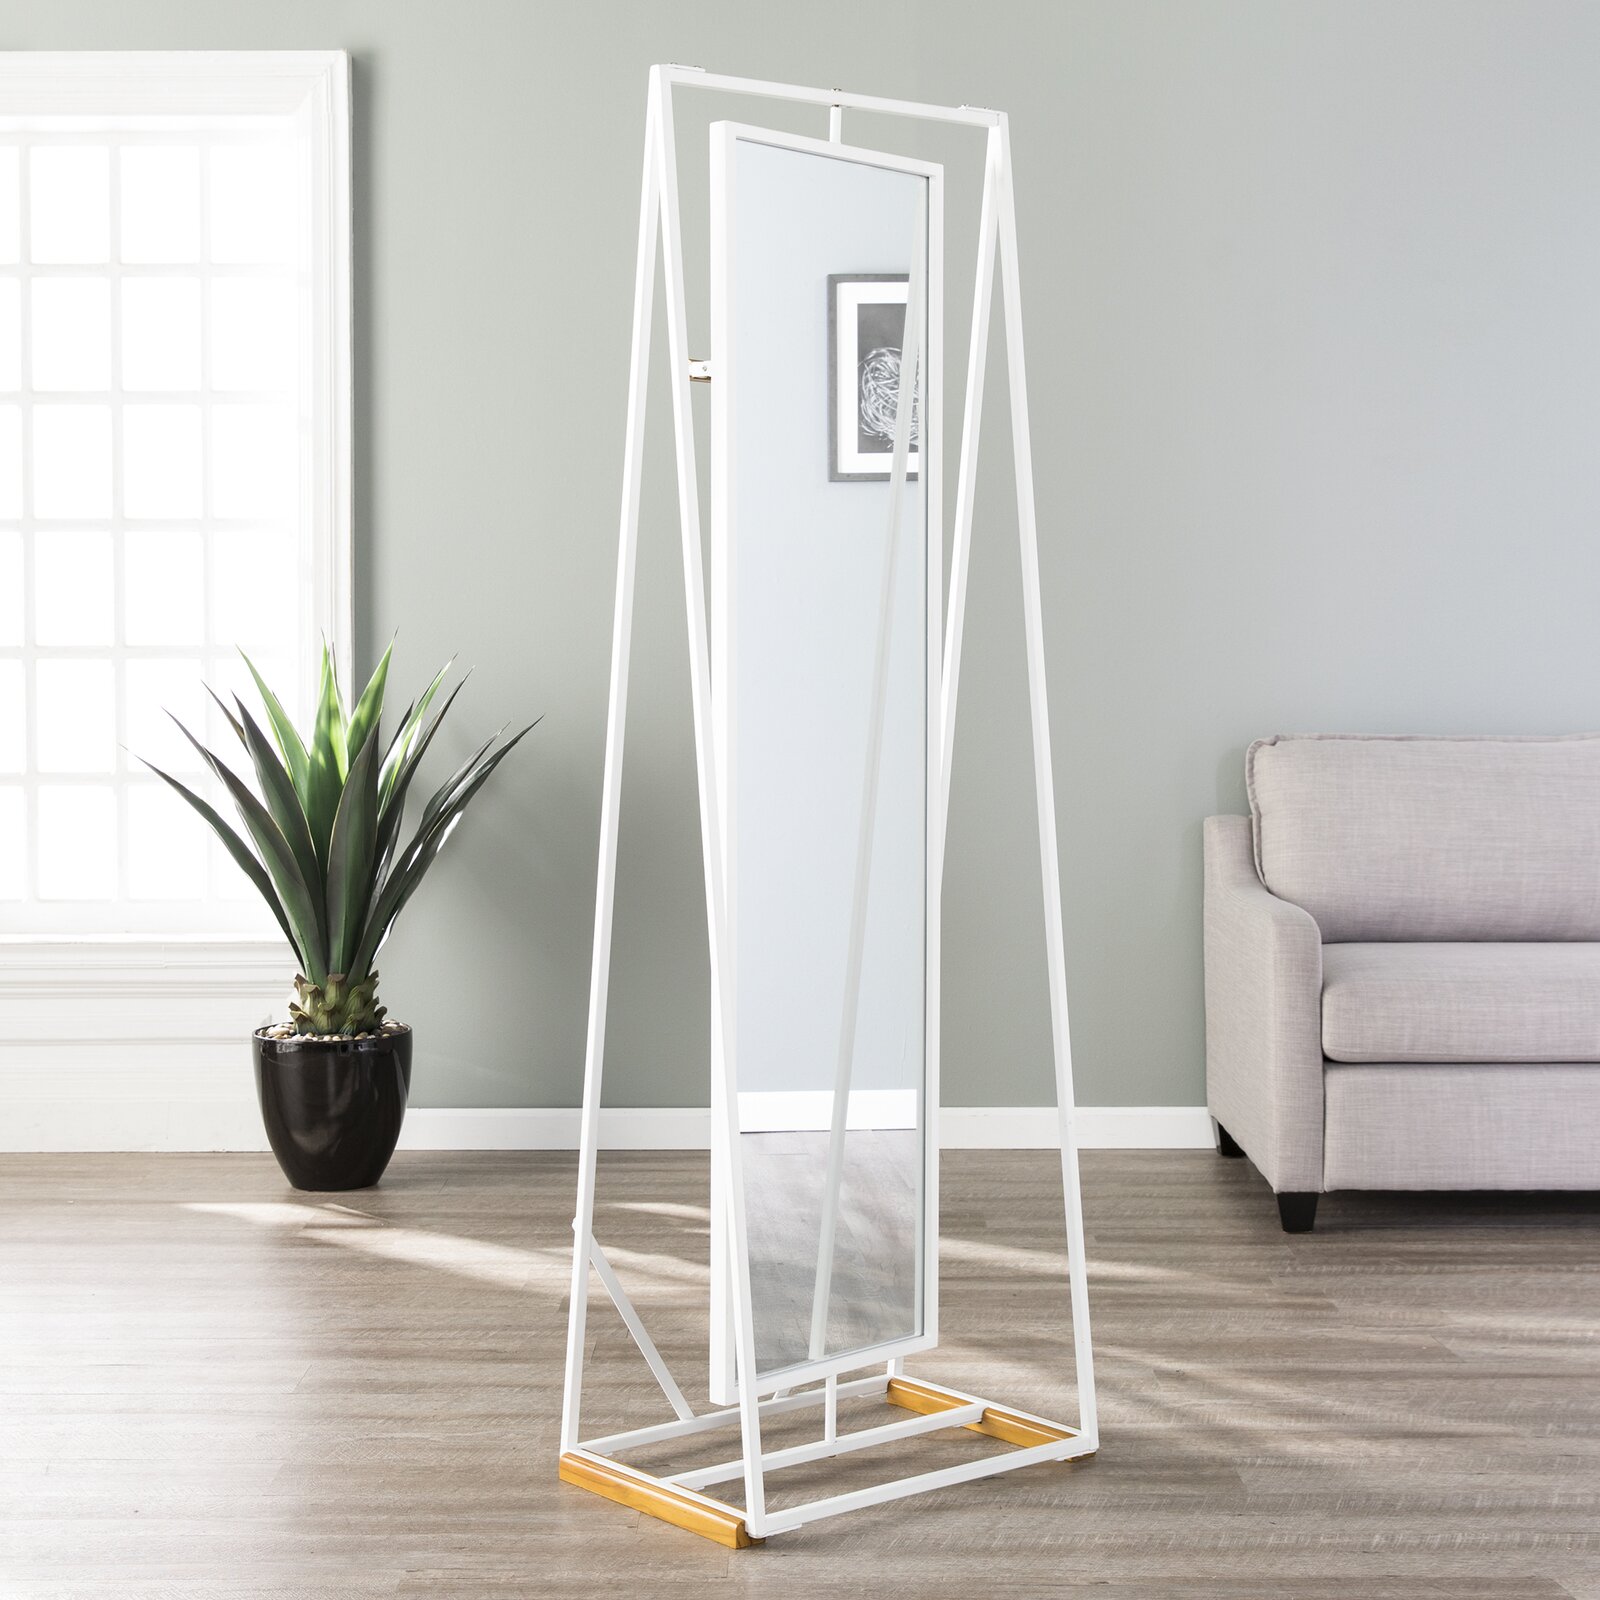 51 Full Length Mirrors To Flatter Your, Floor Length Mirror Decor